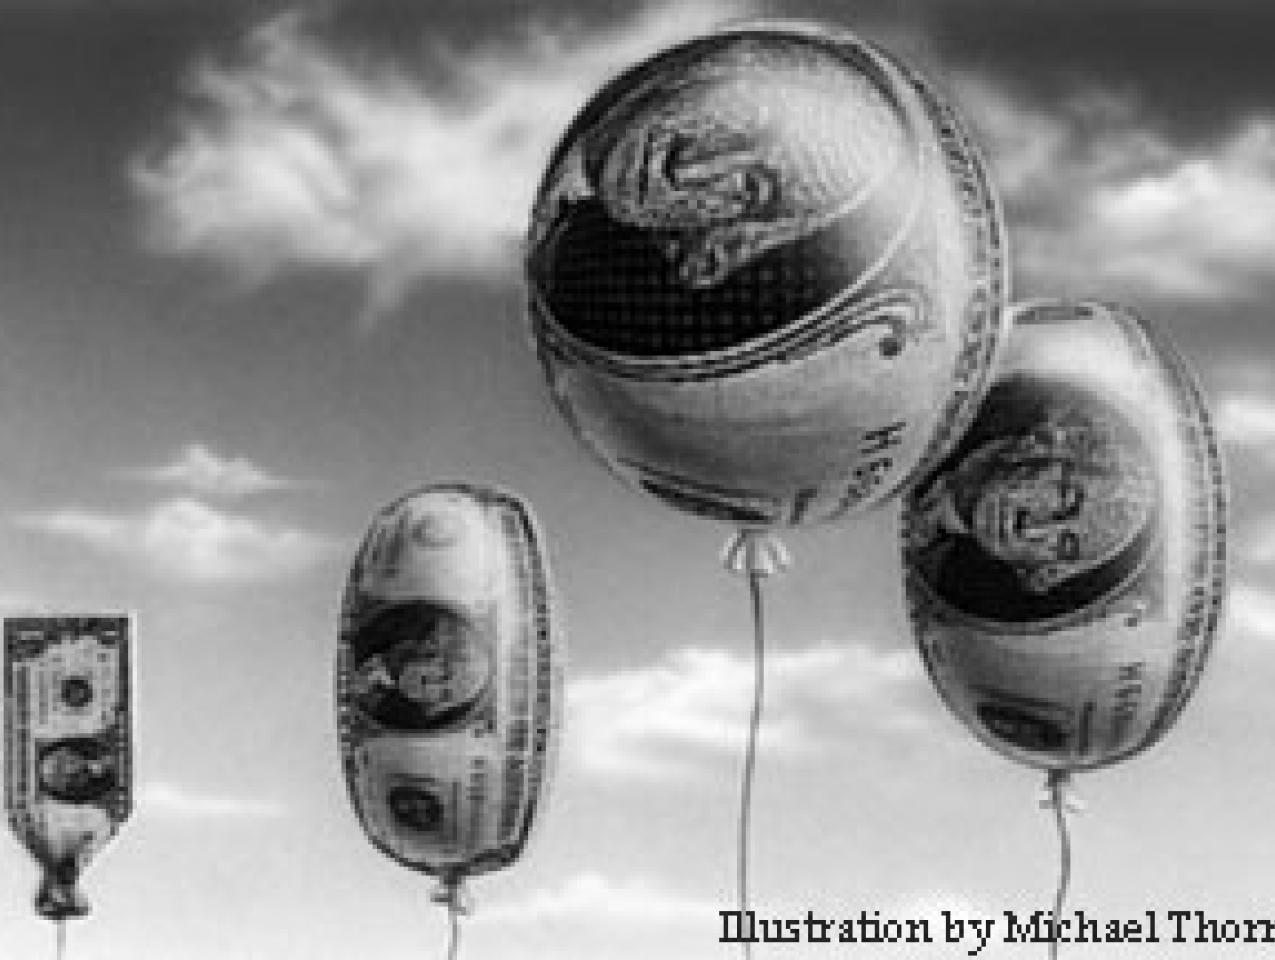 Inflation ballons